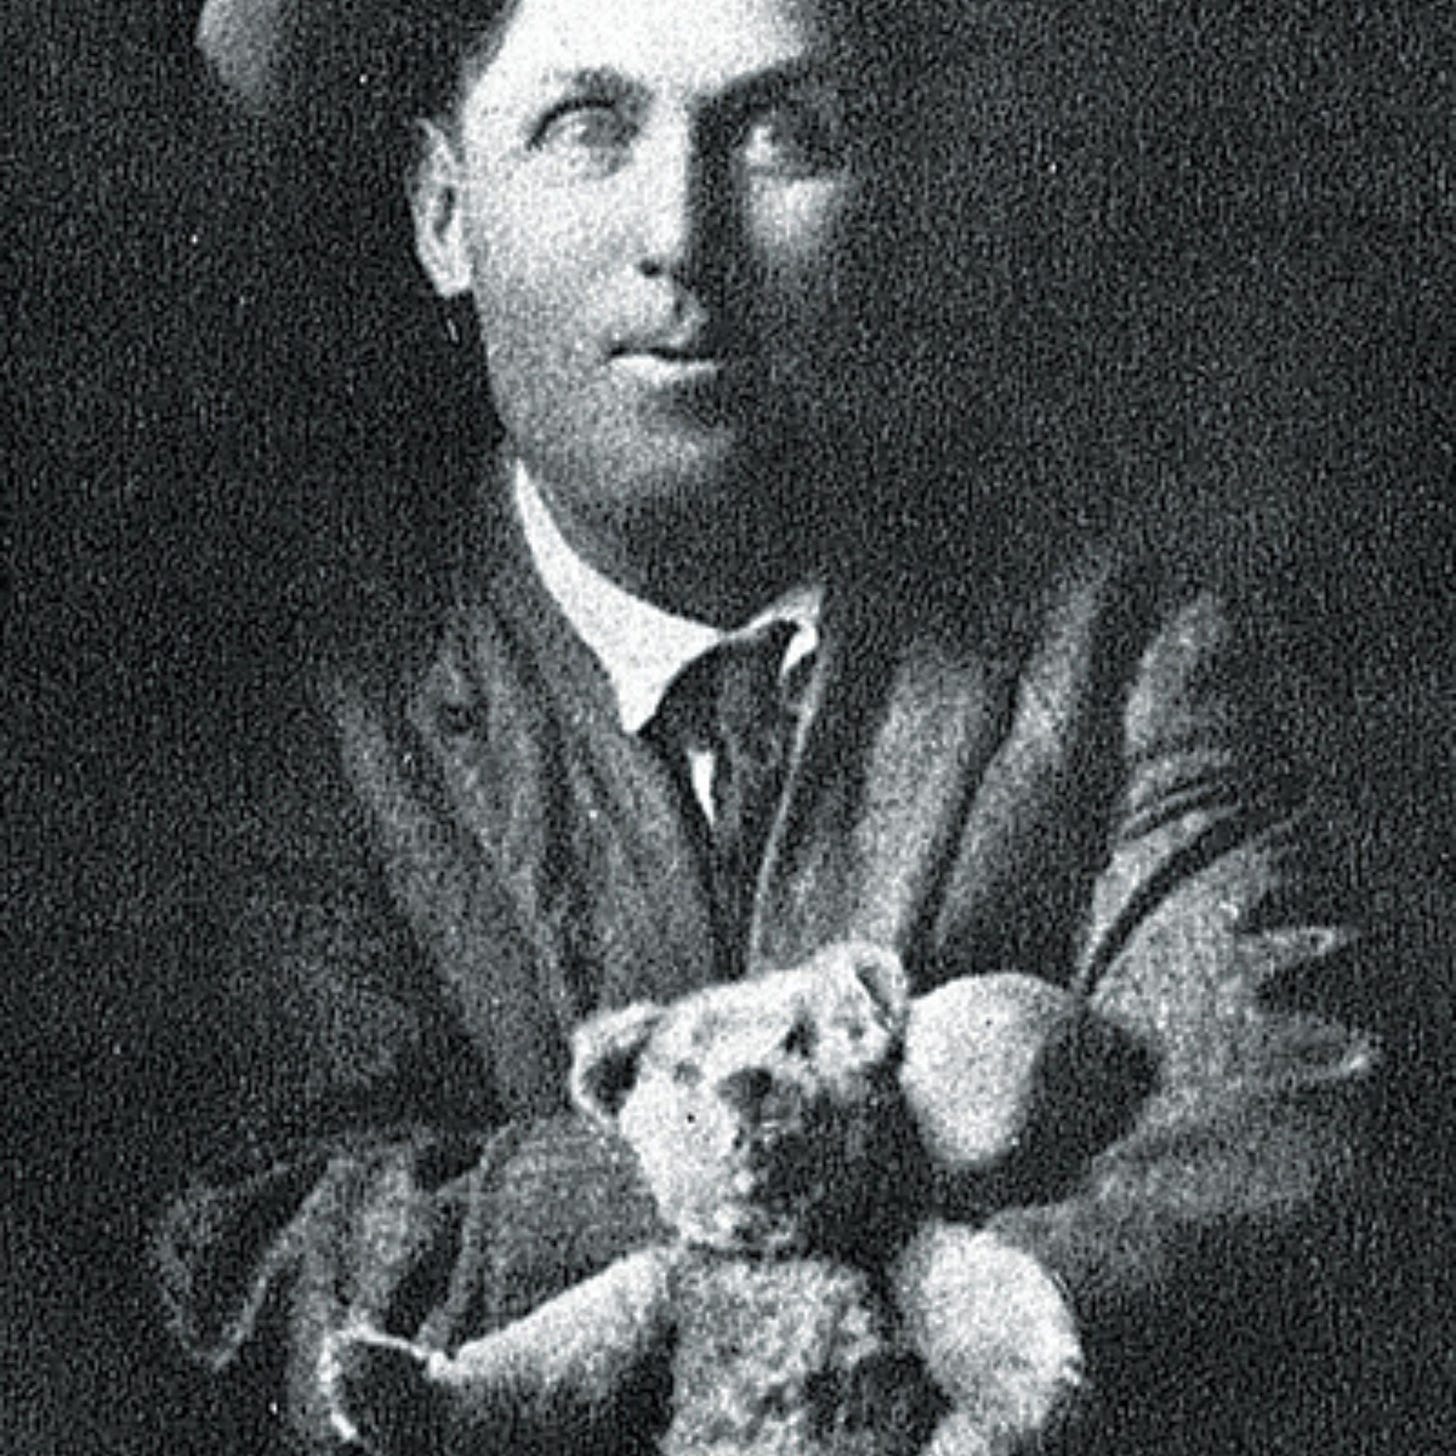 Photo of Wayne Brazel holding teddy bear